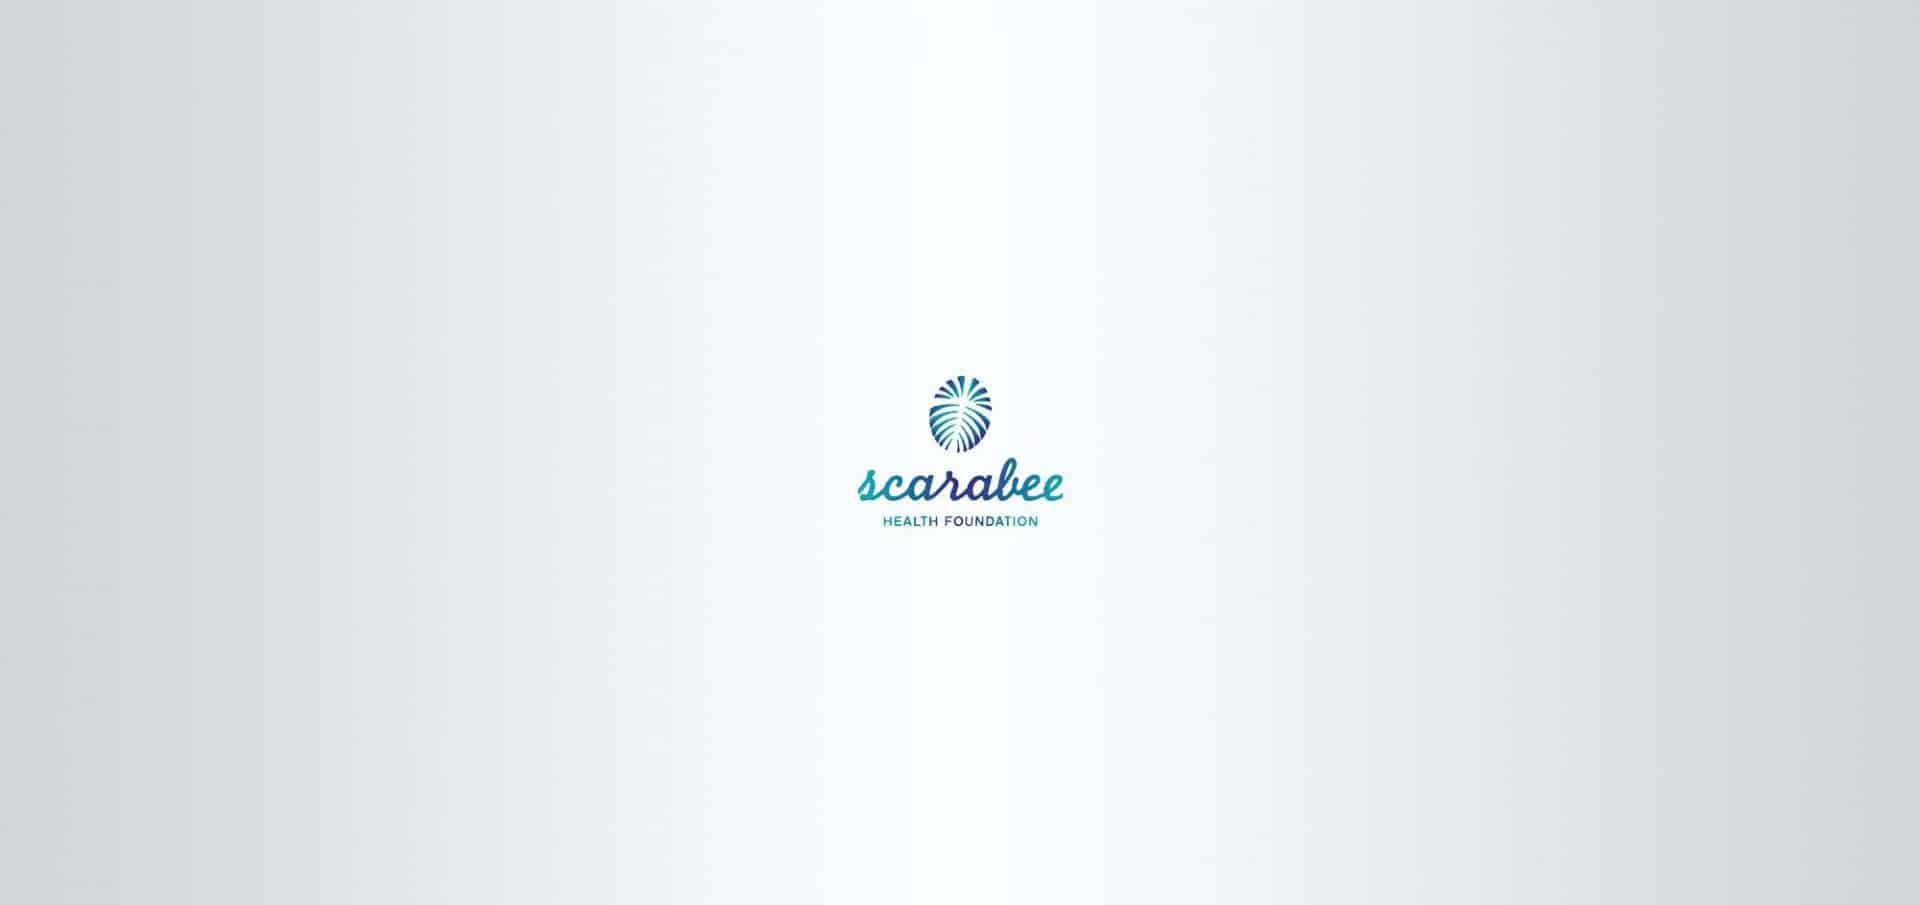 Logo Hasci Scarabee health foundation